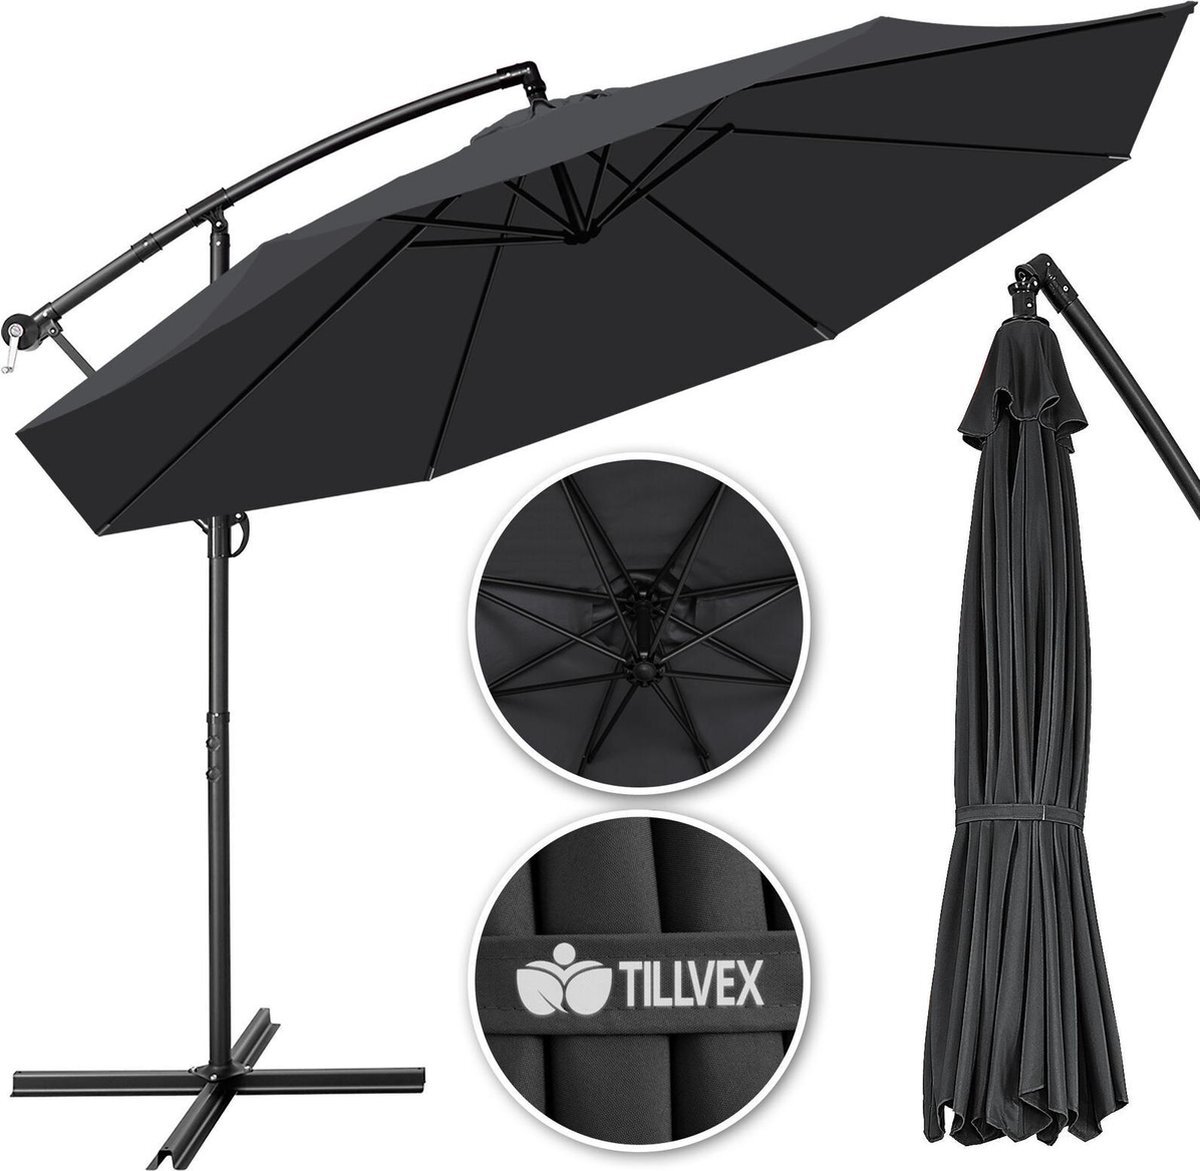 Tillvex Parasol Ø 3m antraciet-zweeparasol -hangparasol- vrijhangende parasol- tuinparasol- slinger-balkon- aluminium-kantelbaar